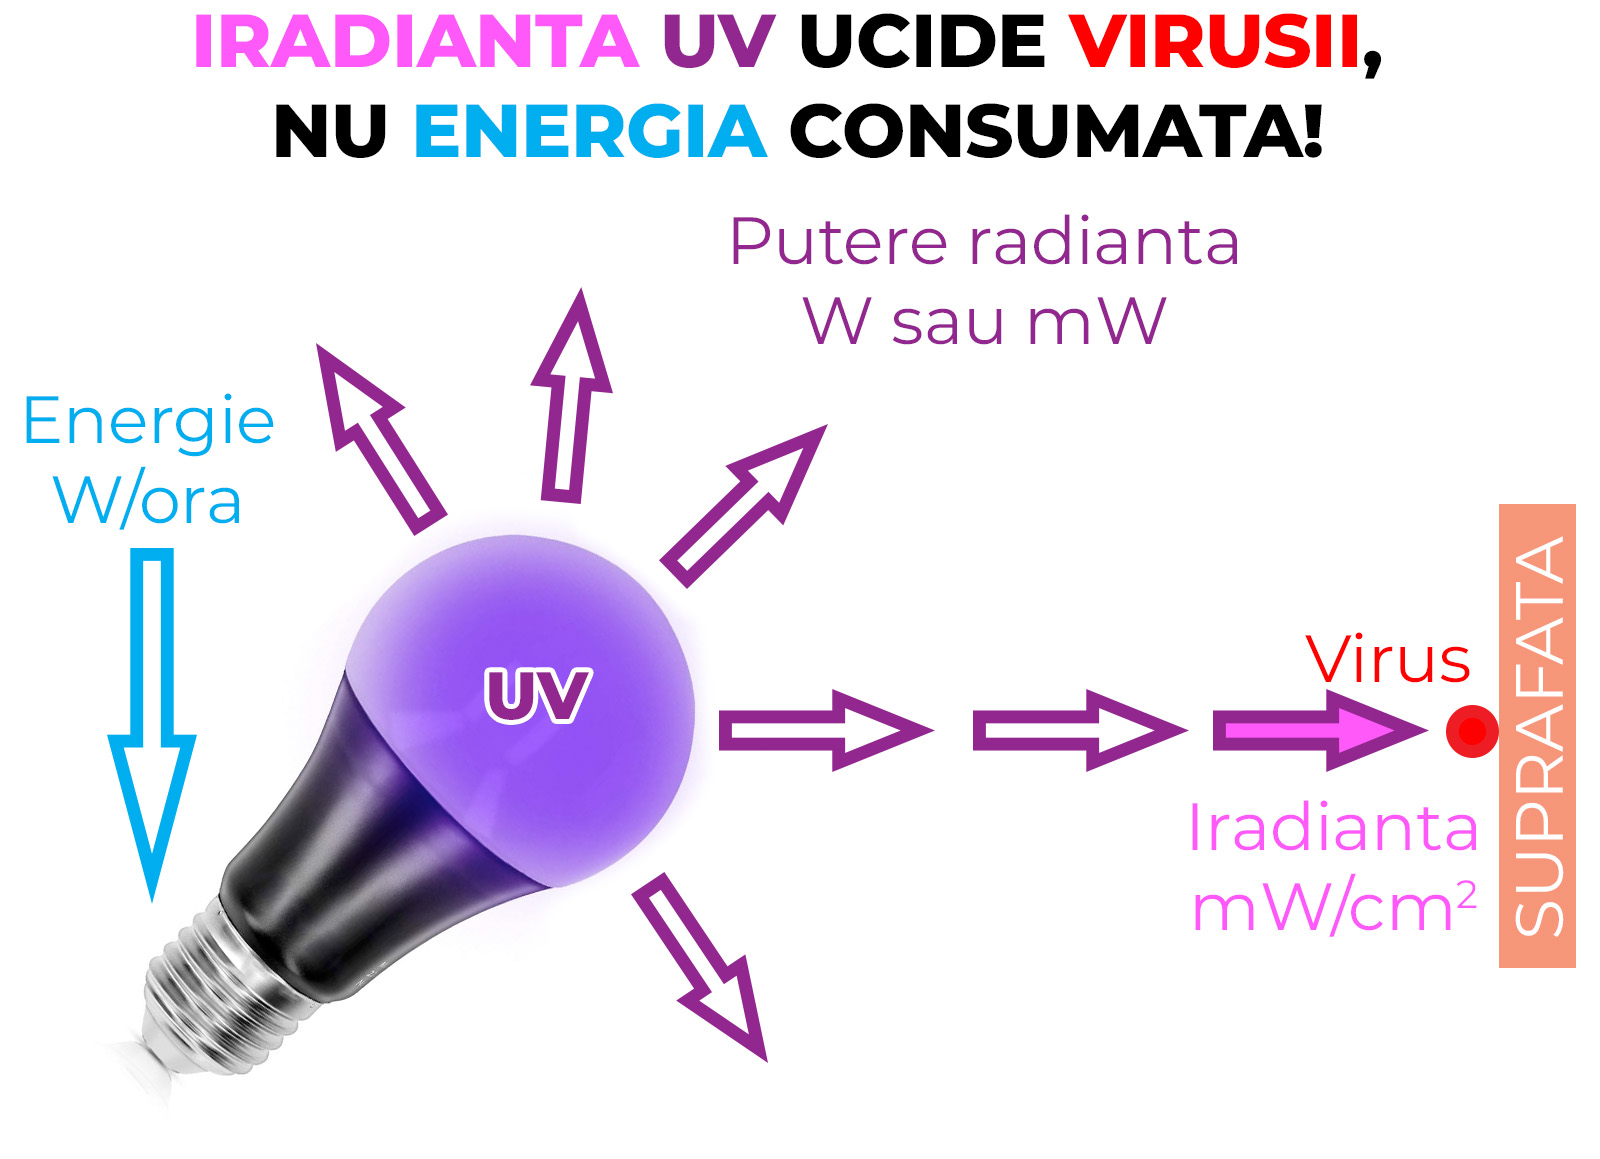 Iradianta UV ucide virusii, nu puterea consumata!